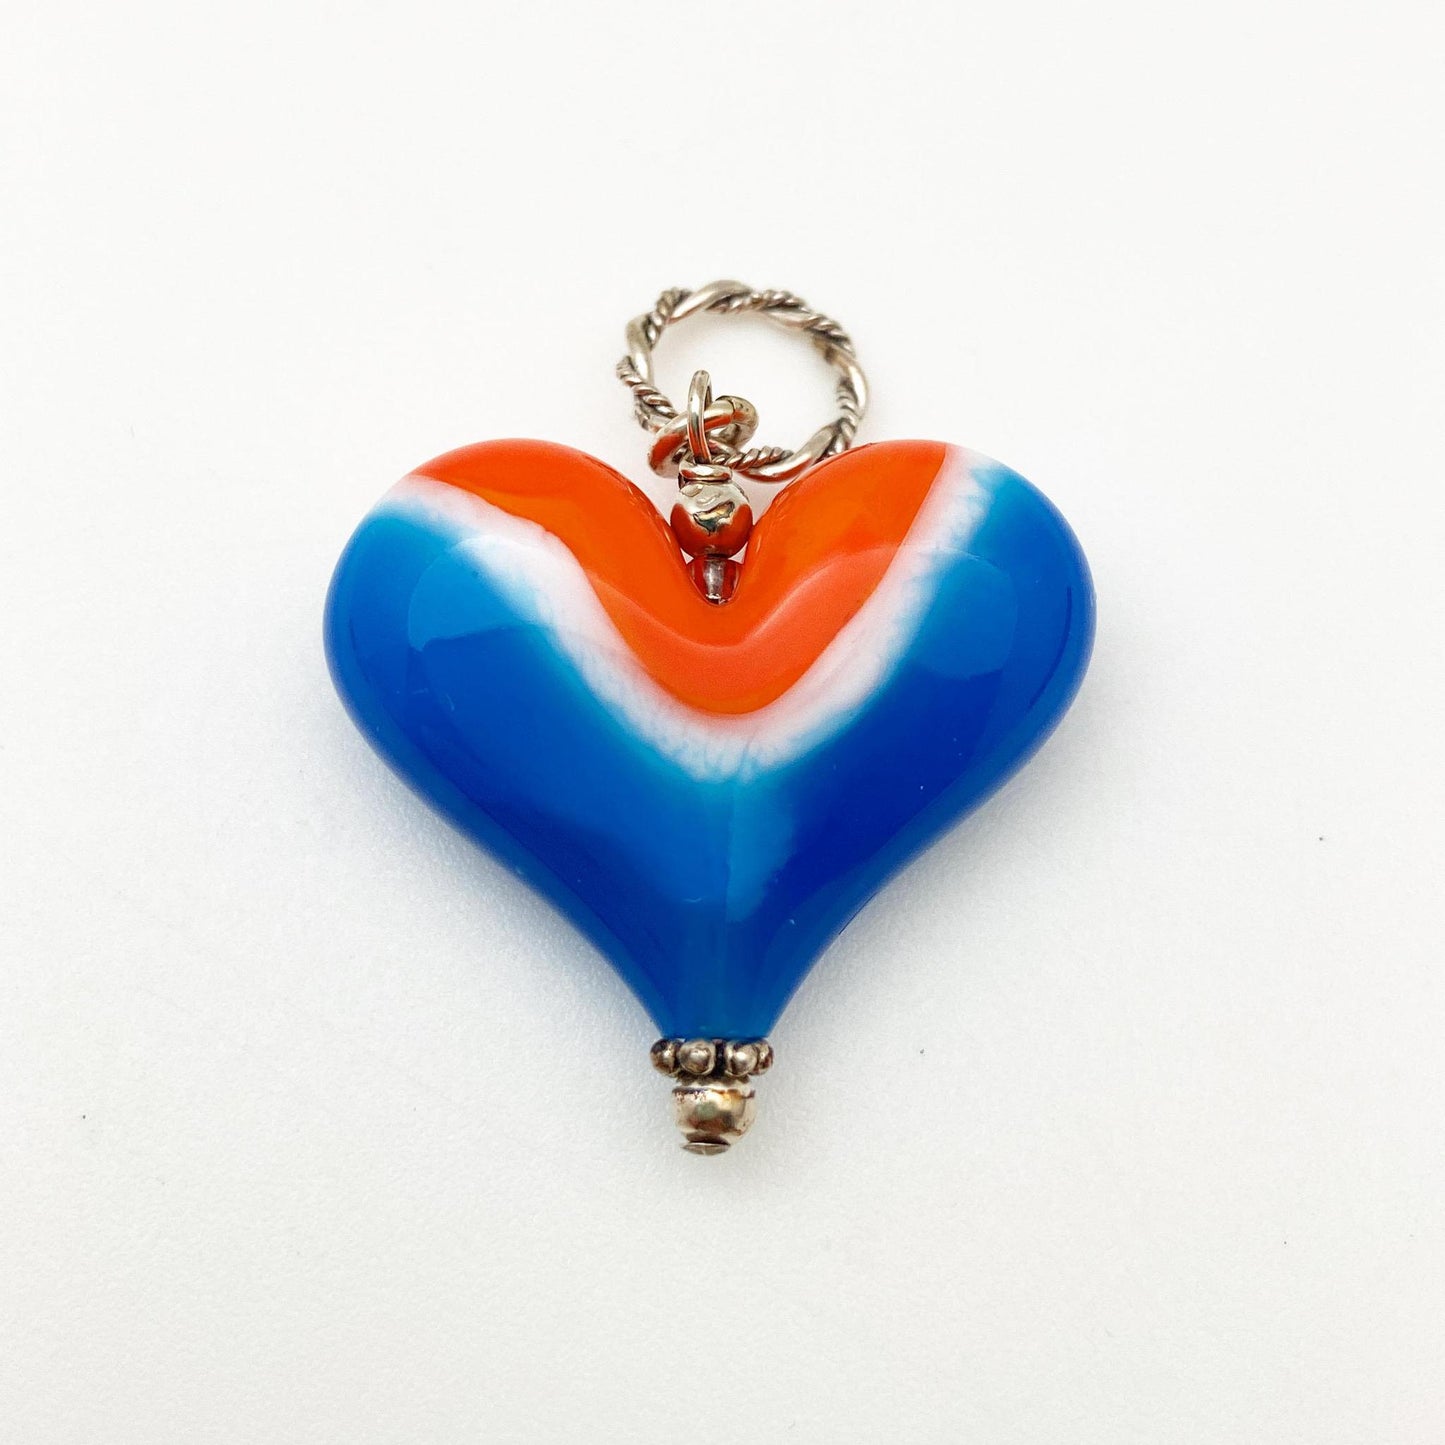 Pendant - Orange, White, and Blue Heart - Handmade Glass